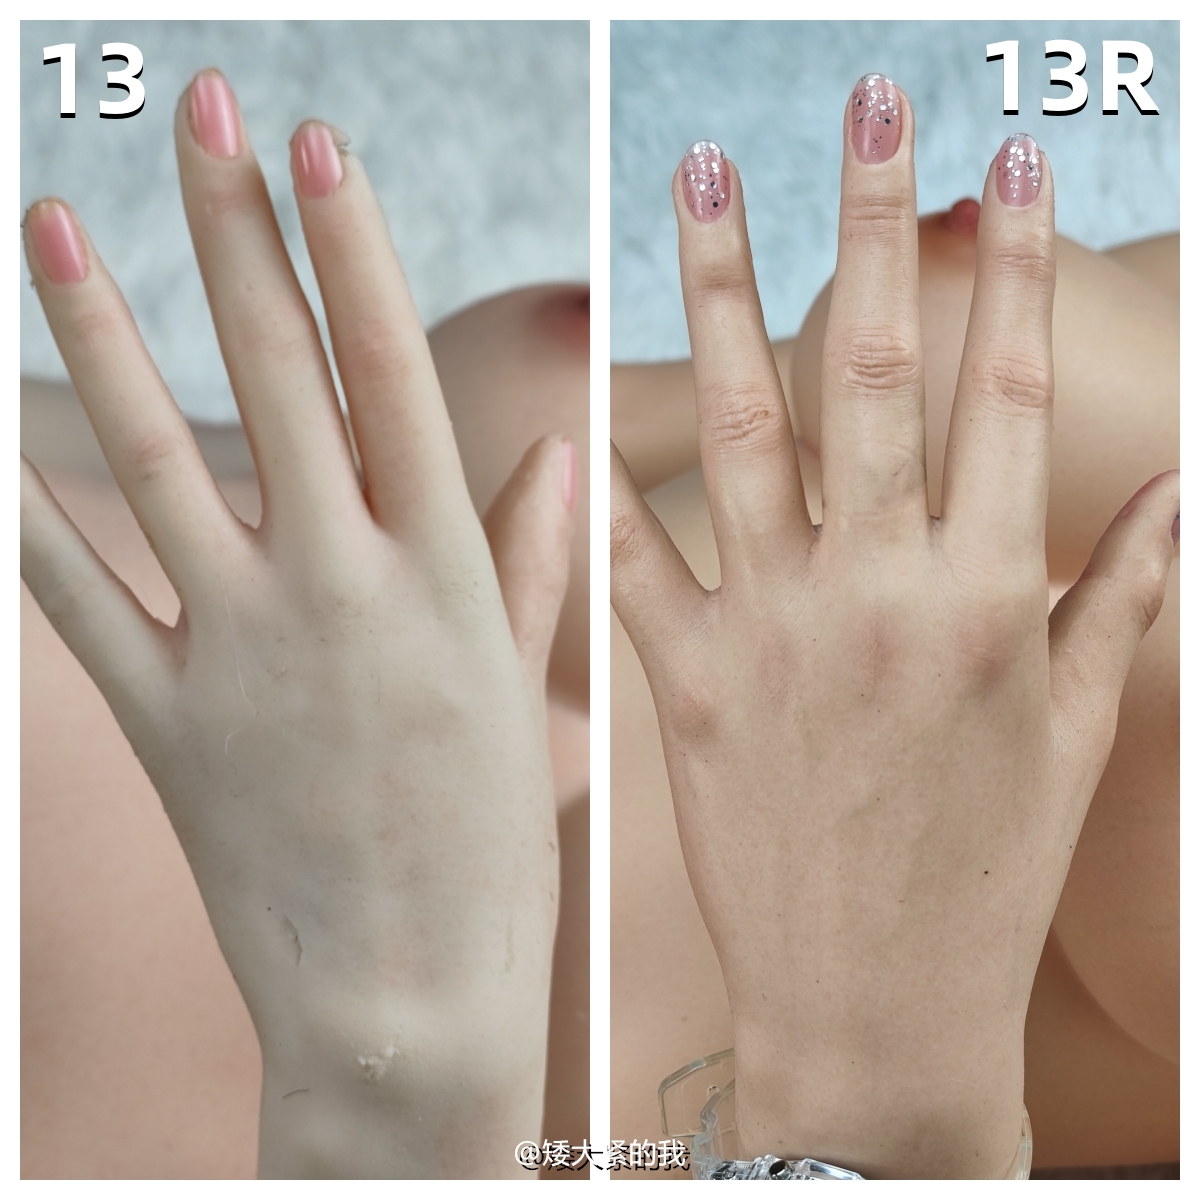 Gynoid Doll RZR|Realistic Silicone Sex Doll|Doll's Hands|Finger|Fingernail|13R|Lori|Lisa|